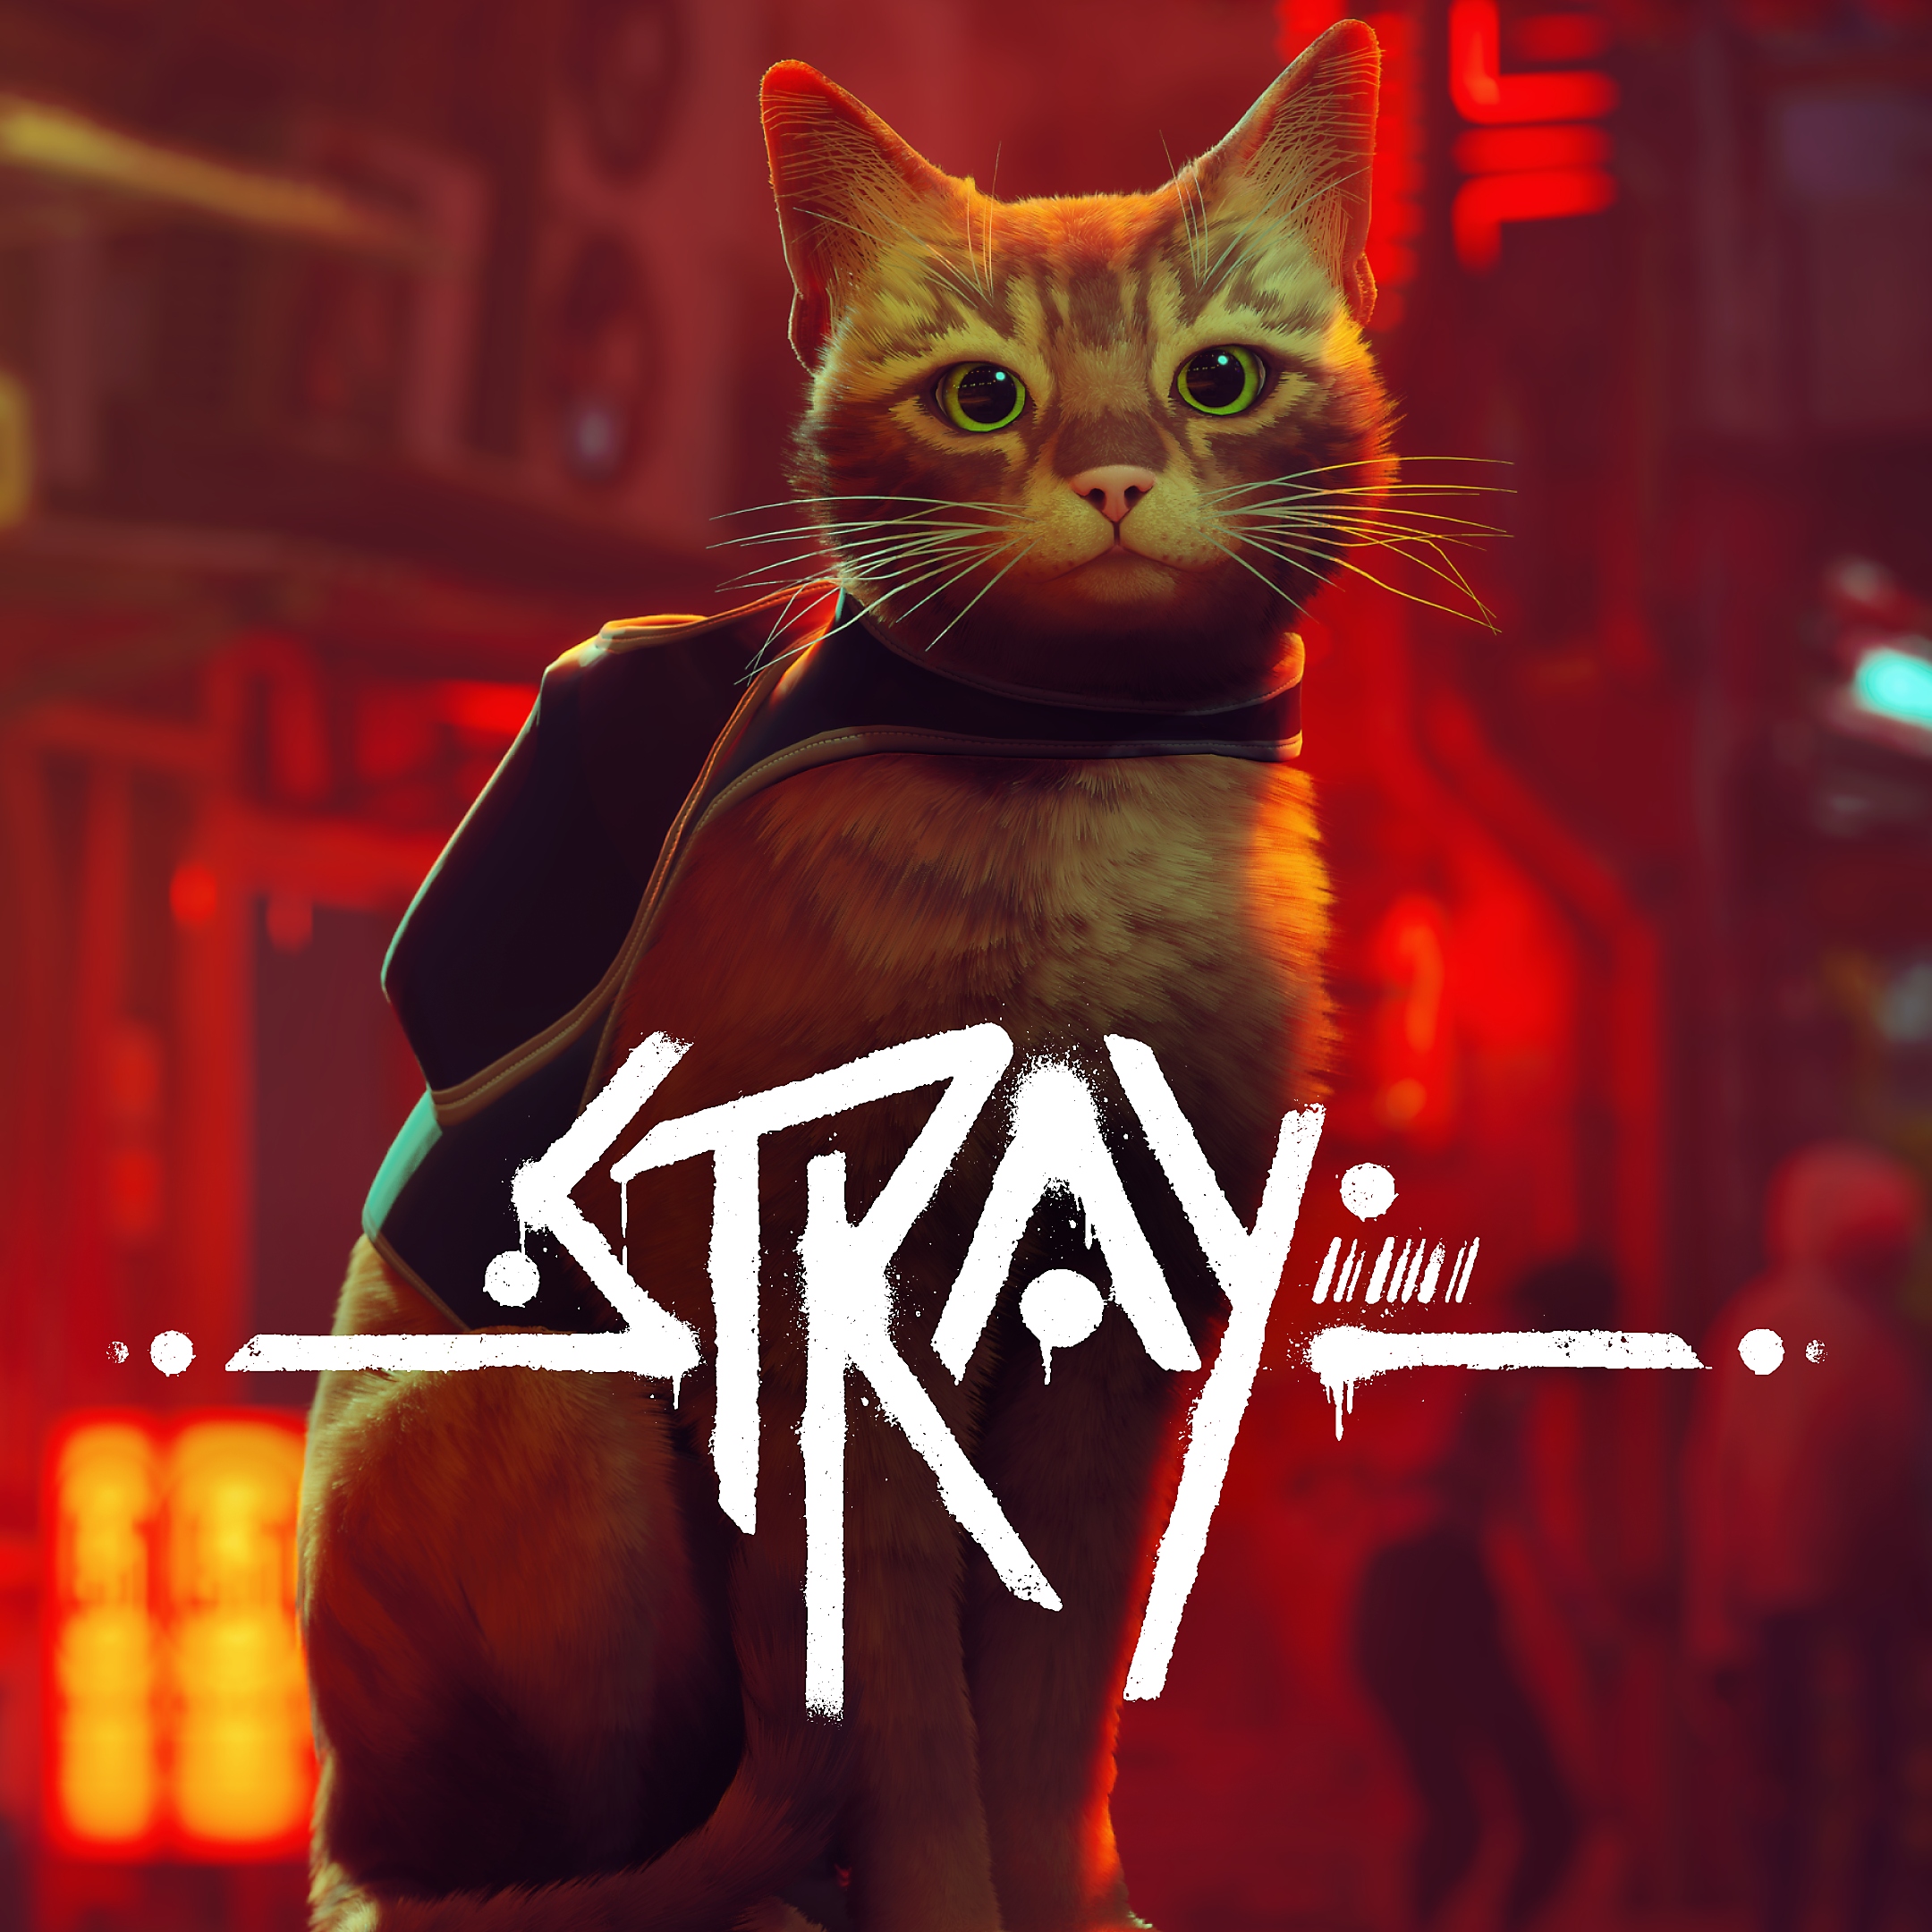 Stray - State of Play Juni 2022 Trailer | PS5, PS4, deutsch